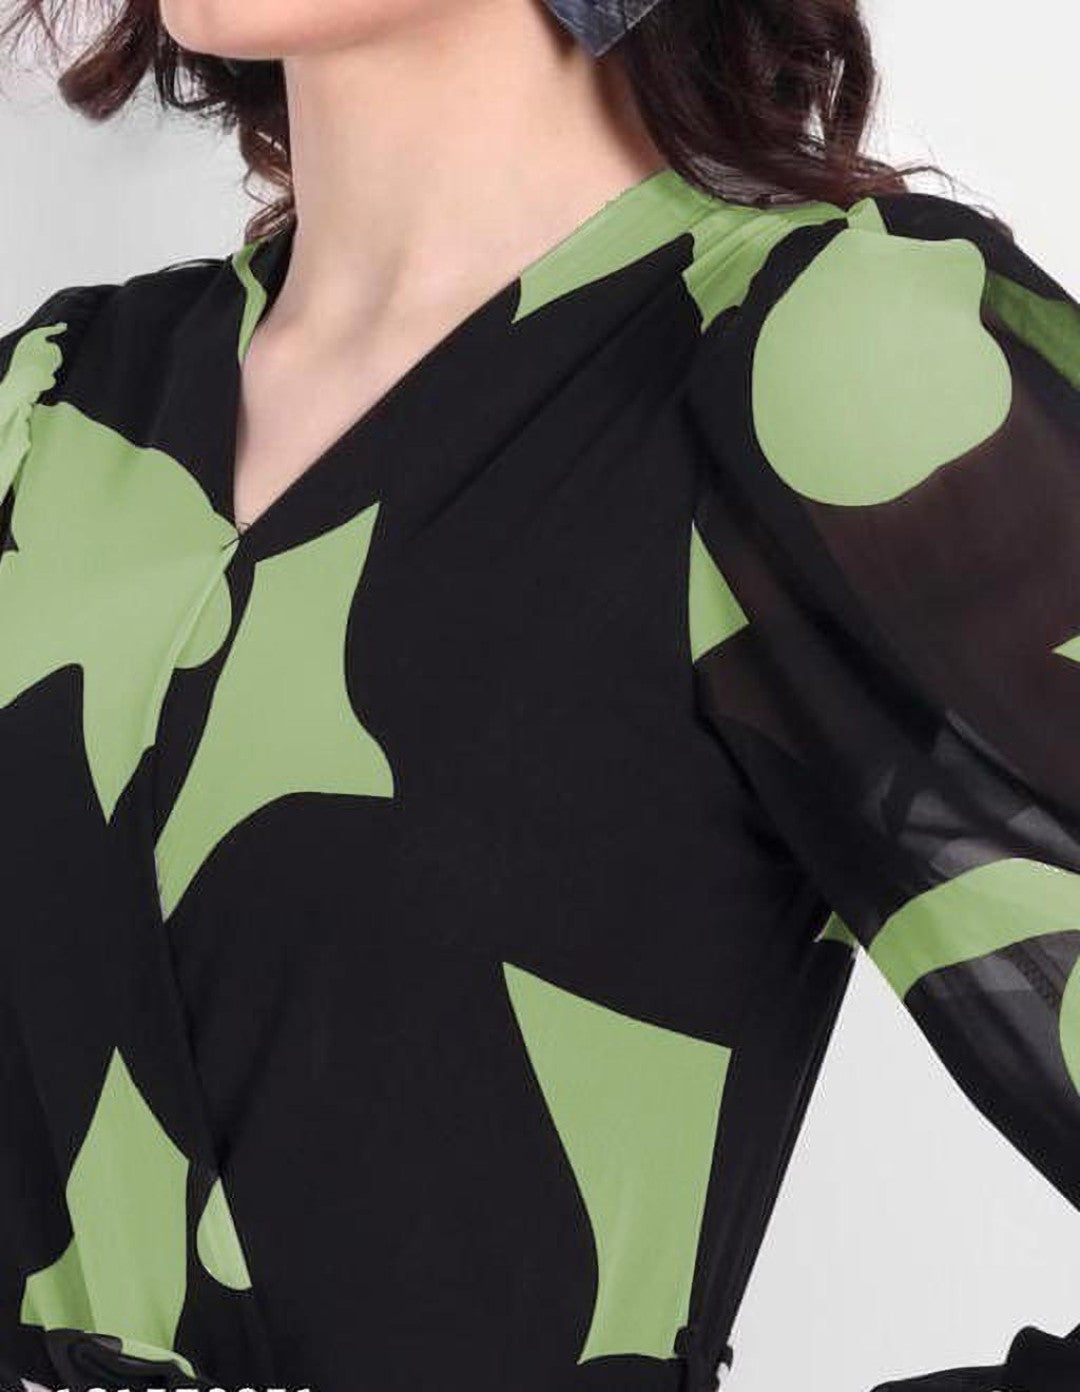 Comfy Graceful full Sleeves Floral Print Jumpsuits for men & Girls